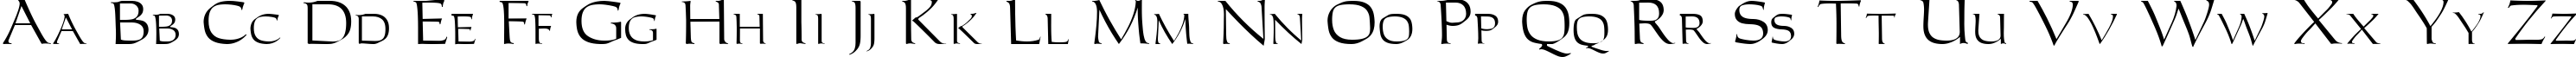 Пример написания английского алфавита шрифтом Carleton